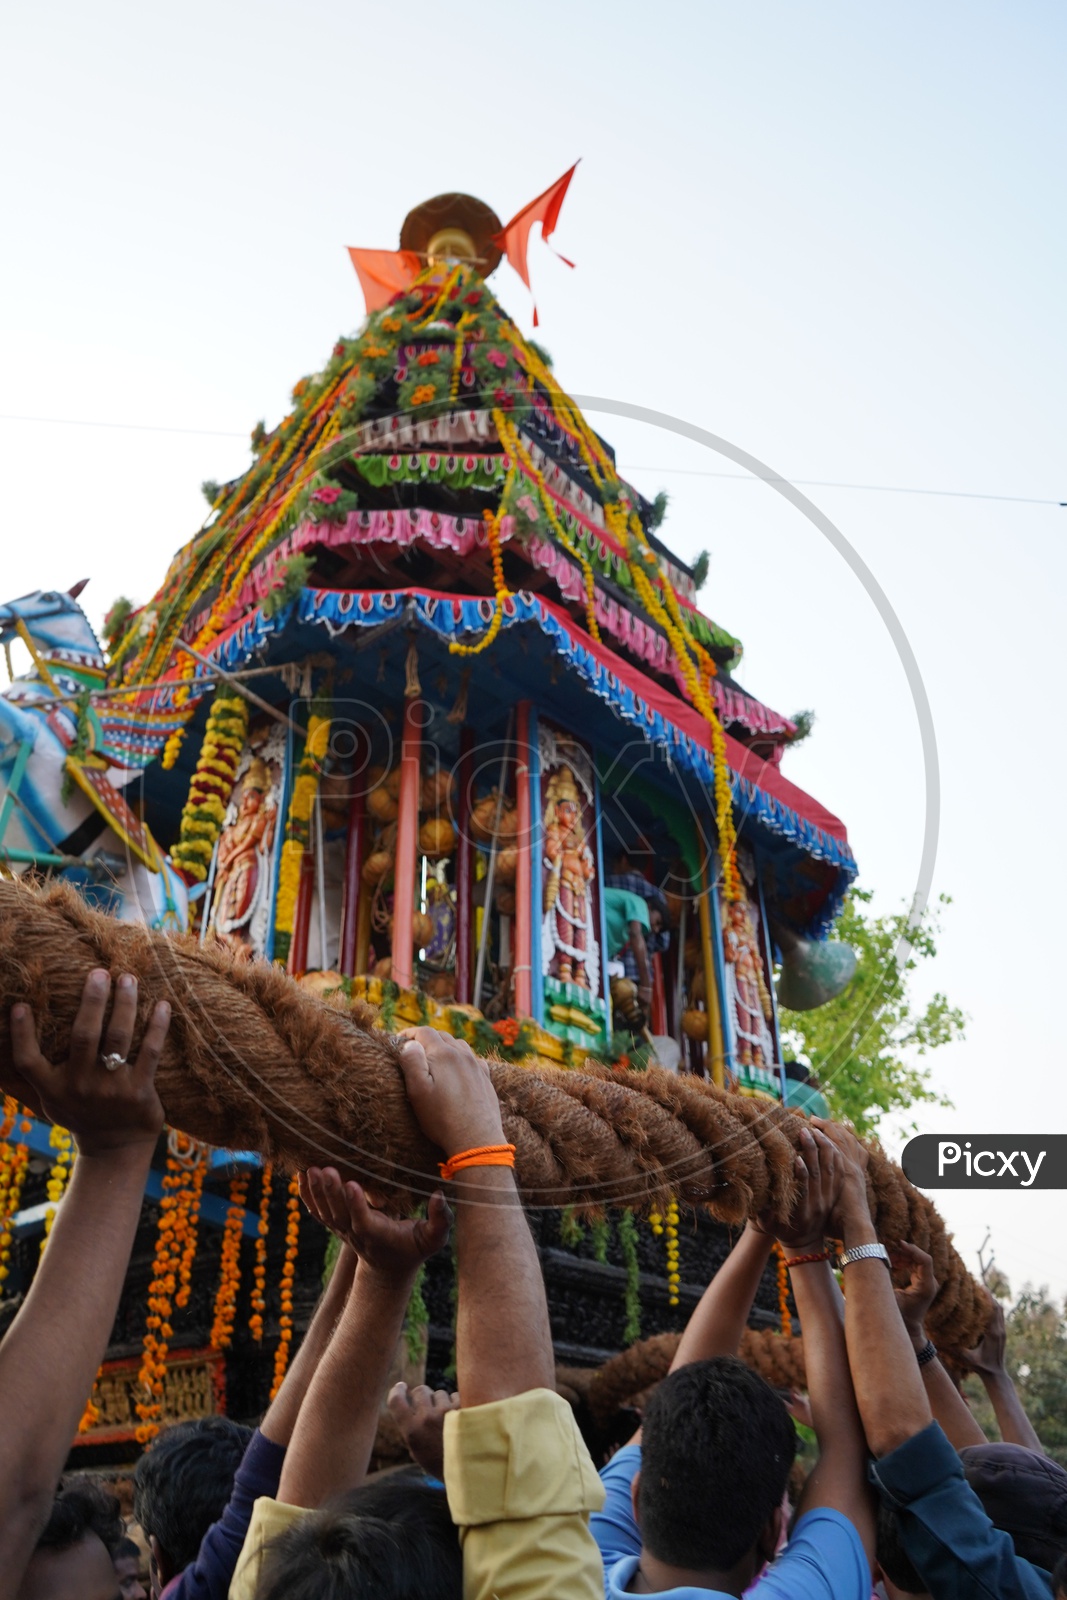 Hindu Devotees Pulling The Wooden Chariot Of Sri Panakala Lakshmi Narasimha Swamy Temple